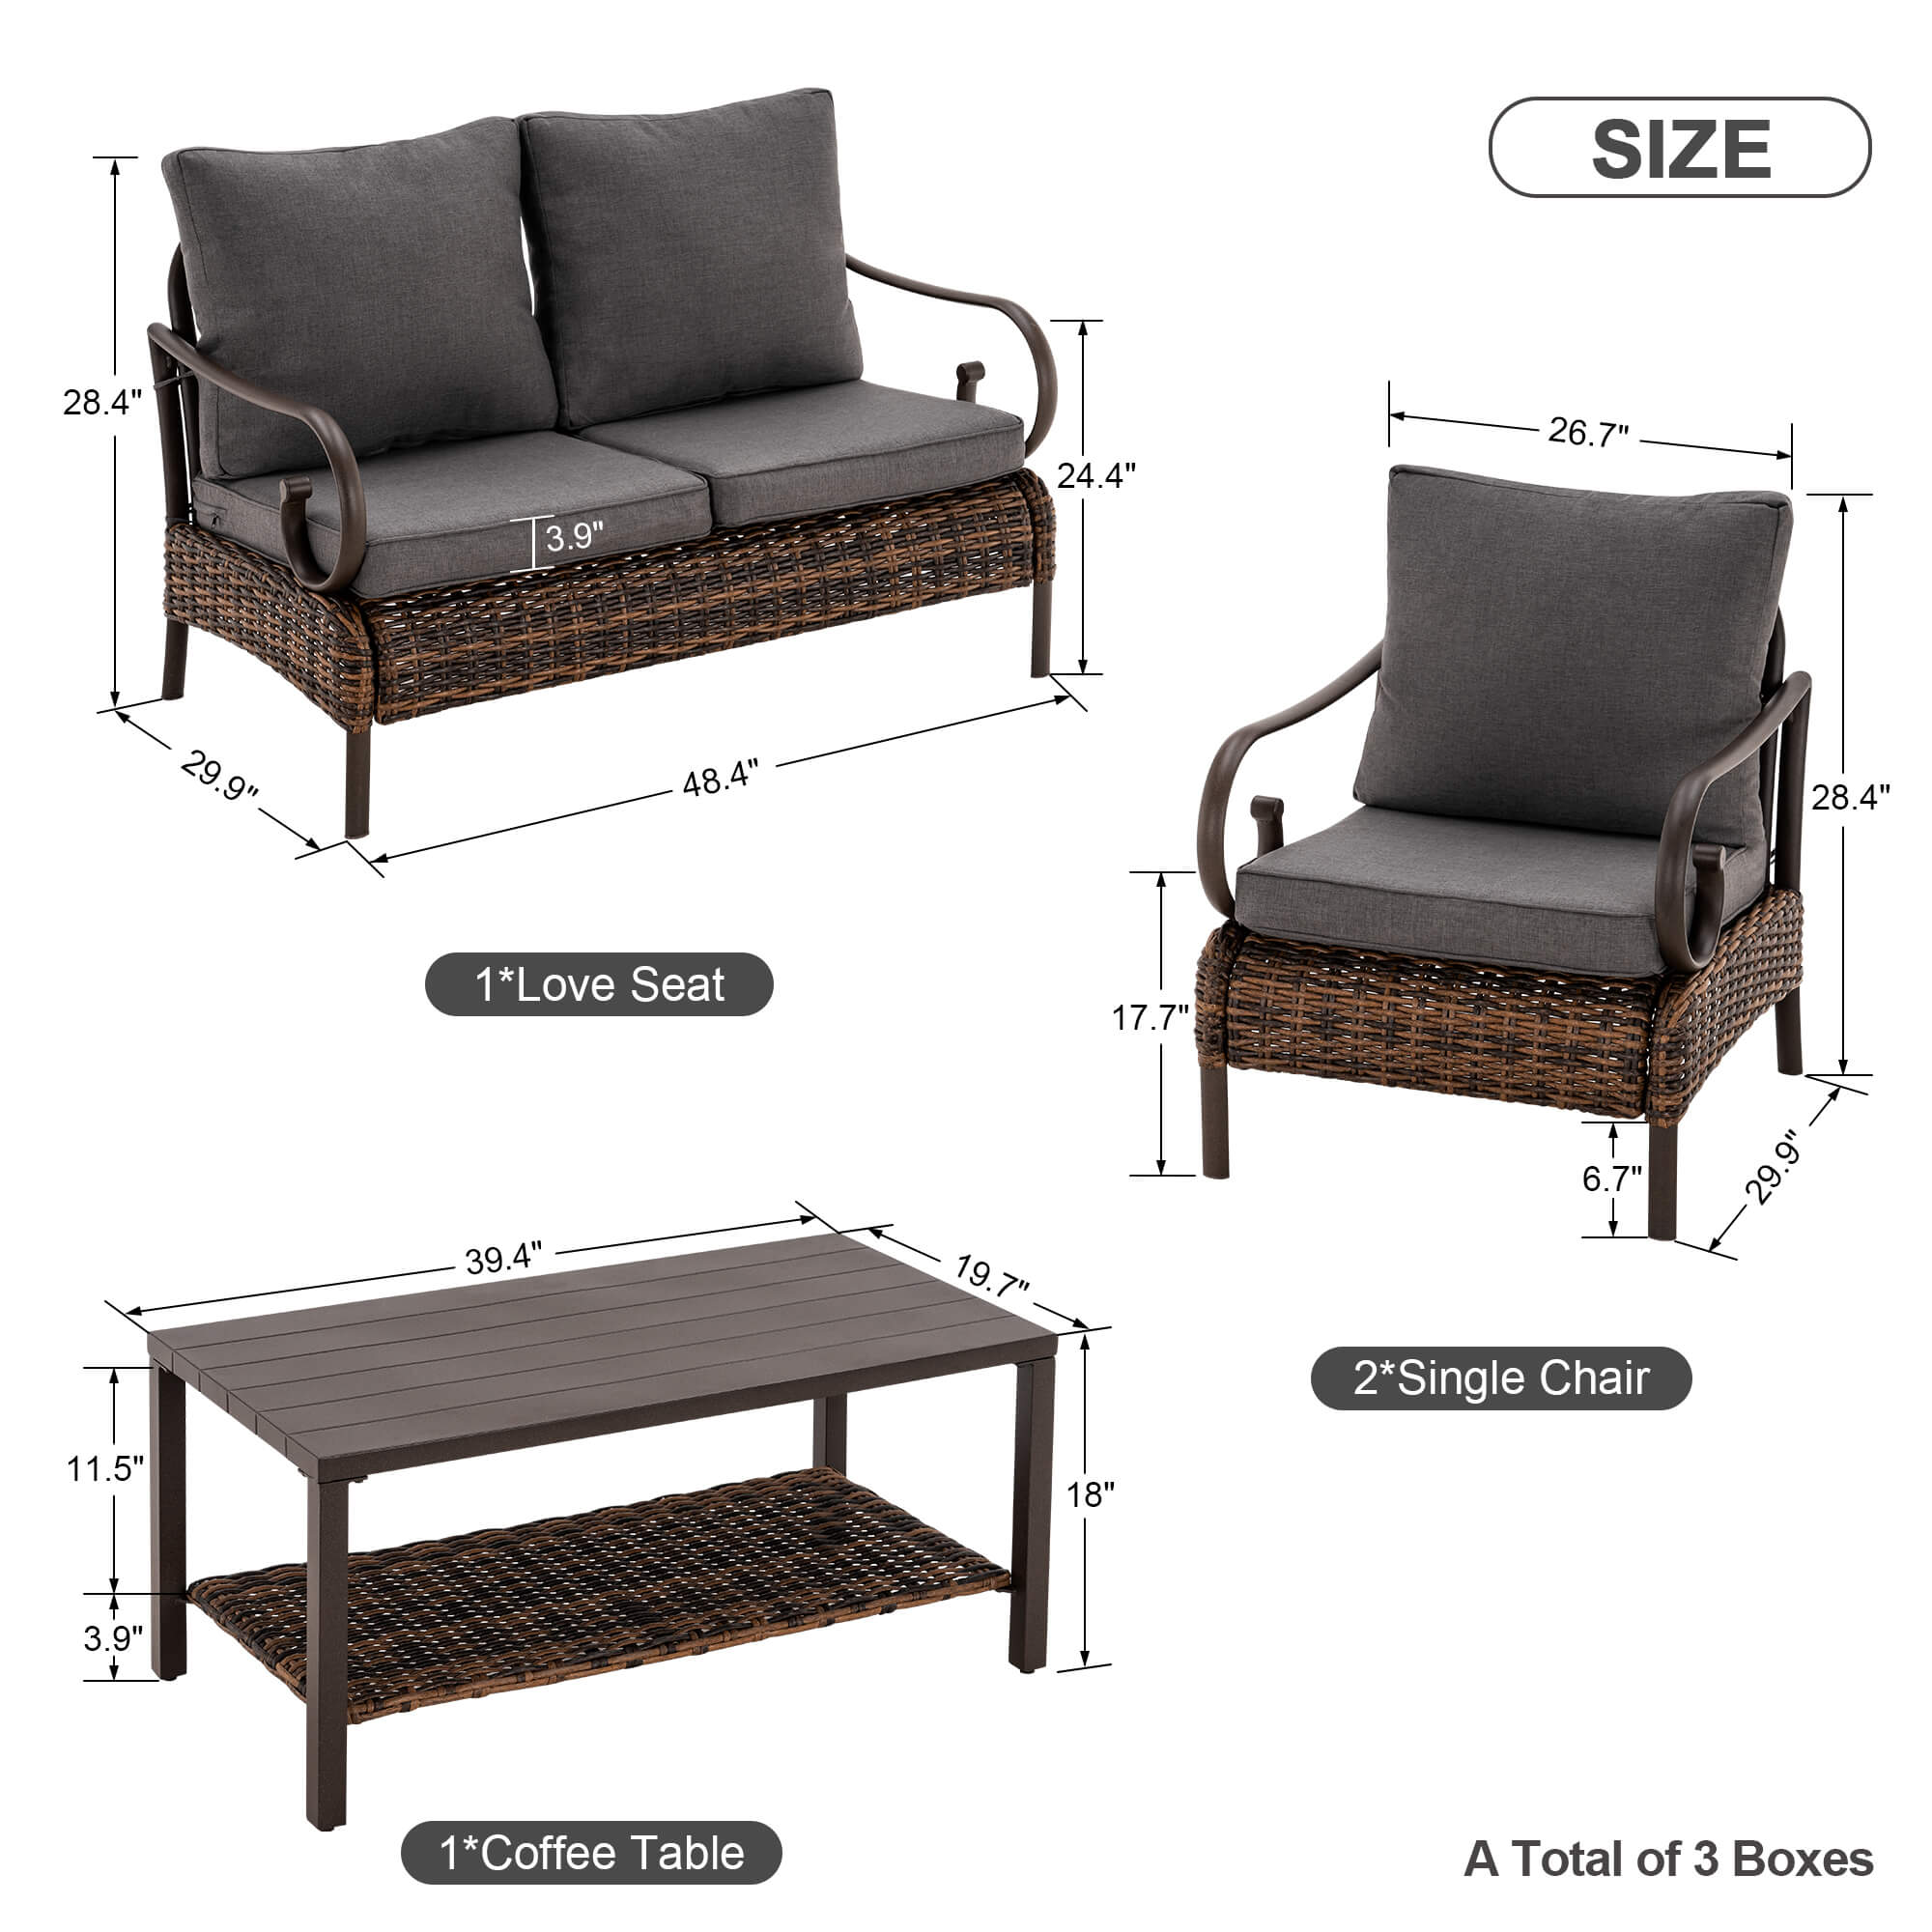 Ivinta Outdoor Patio Furniture Set, 4-Piece Wicker Conversation Sets